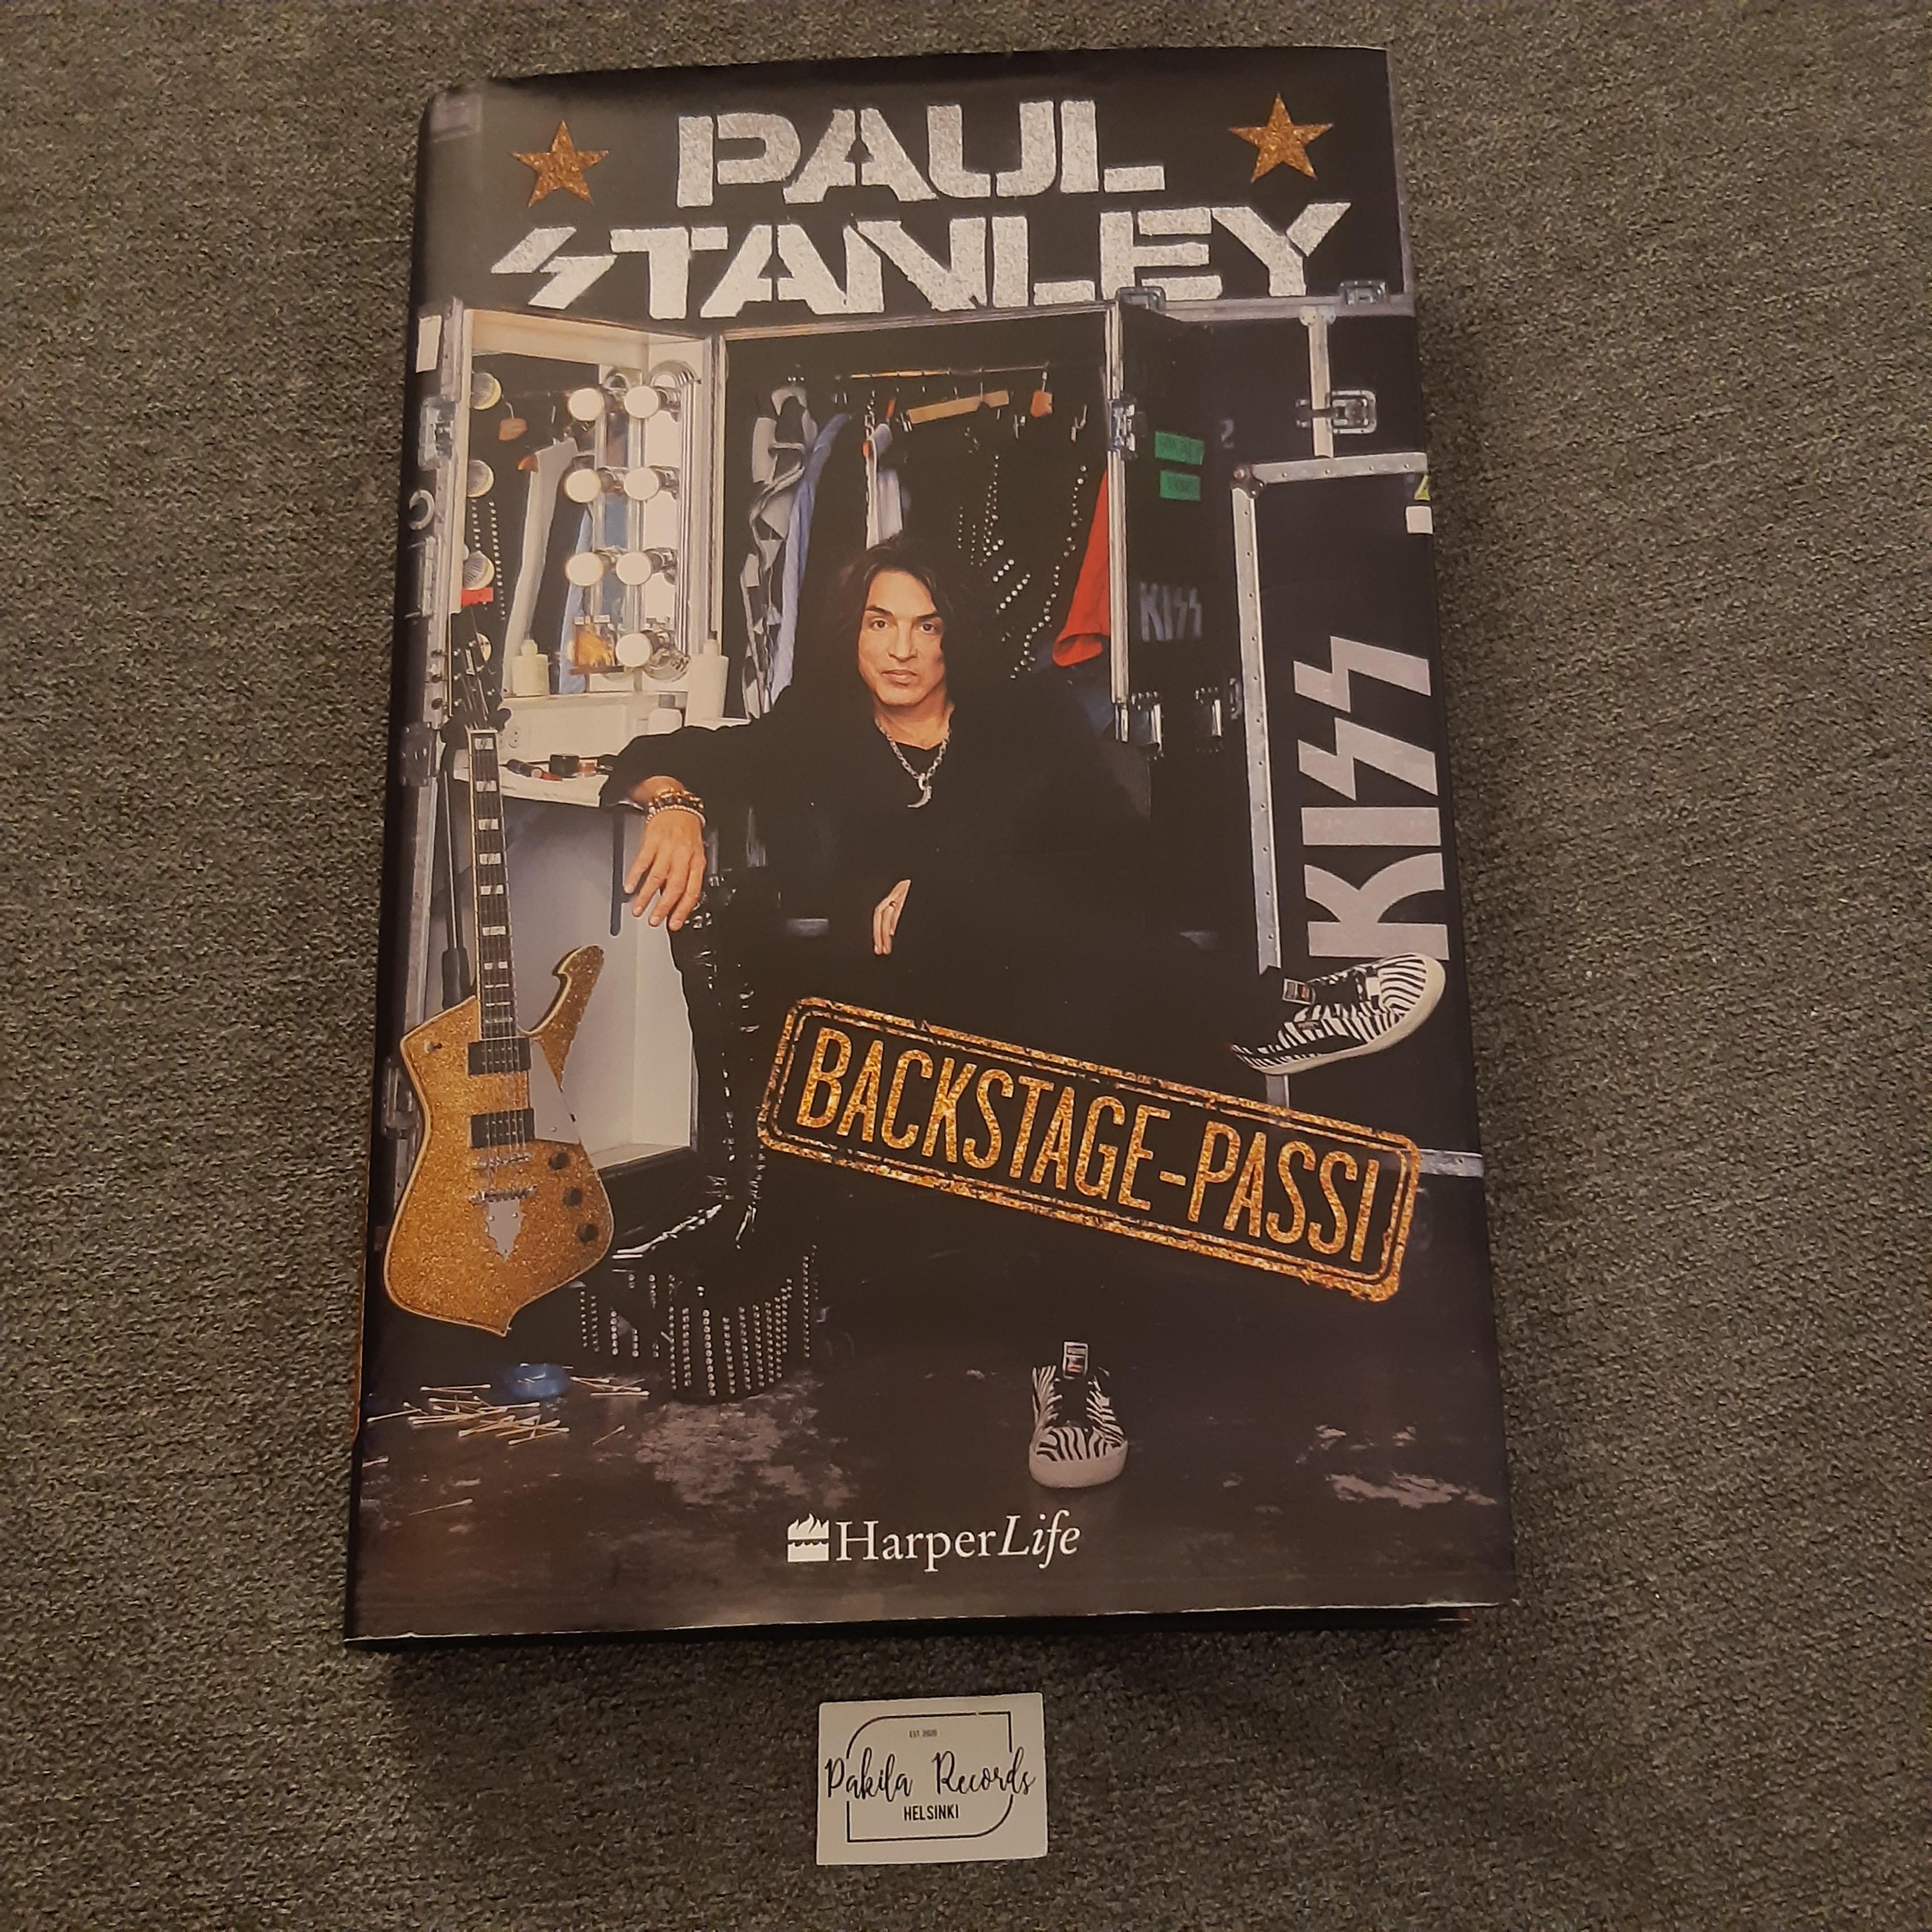 Paul Stanley, Backstage-passi - Kirja (käytetty)